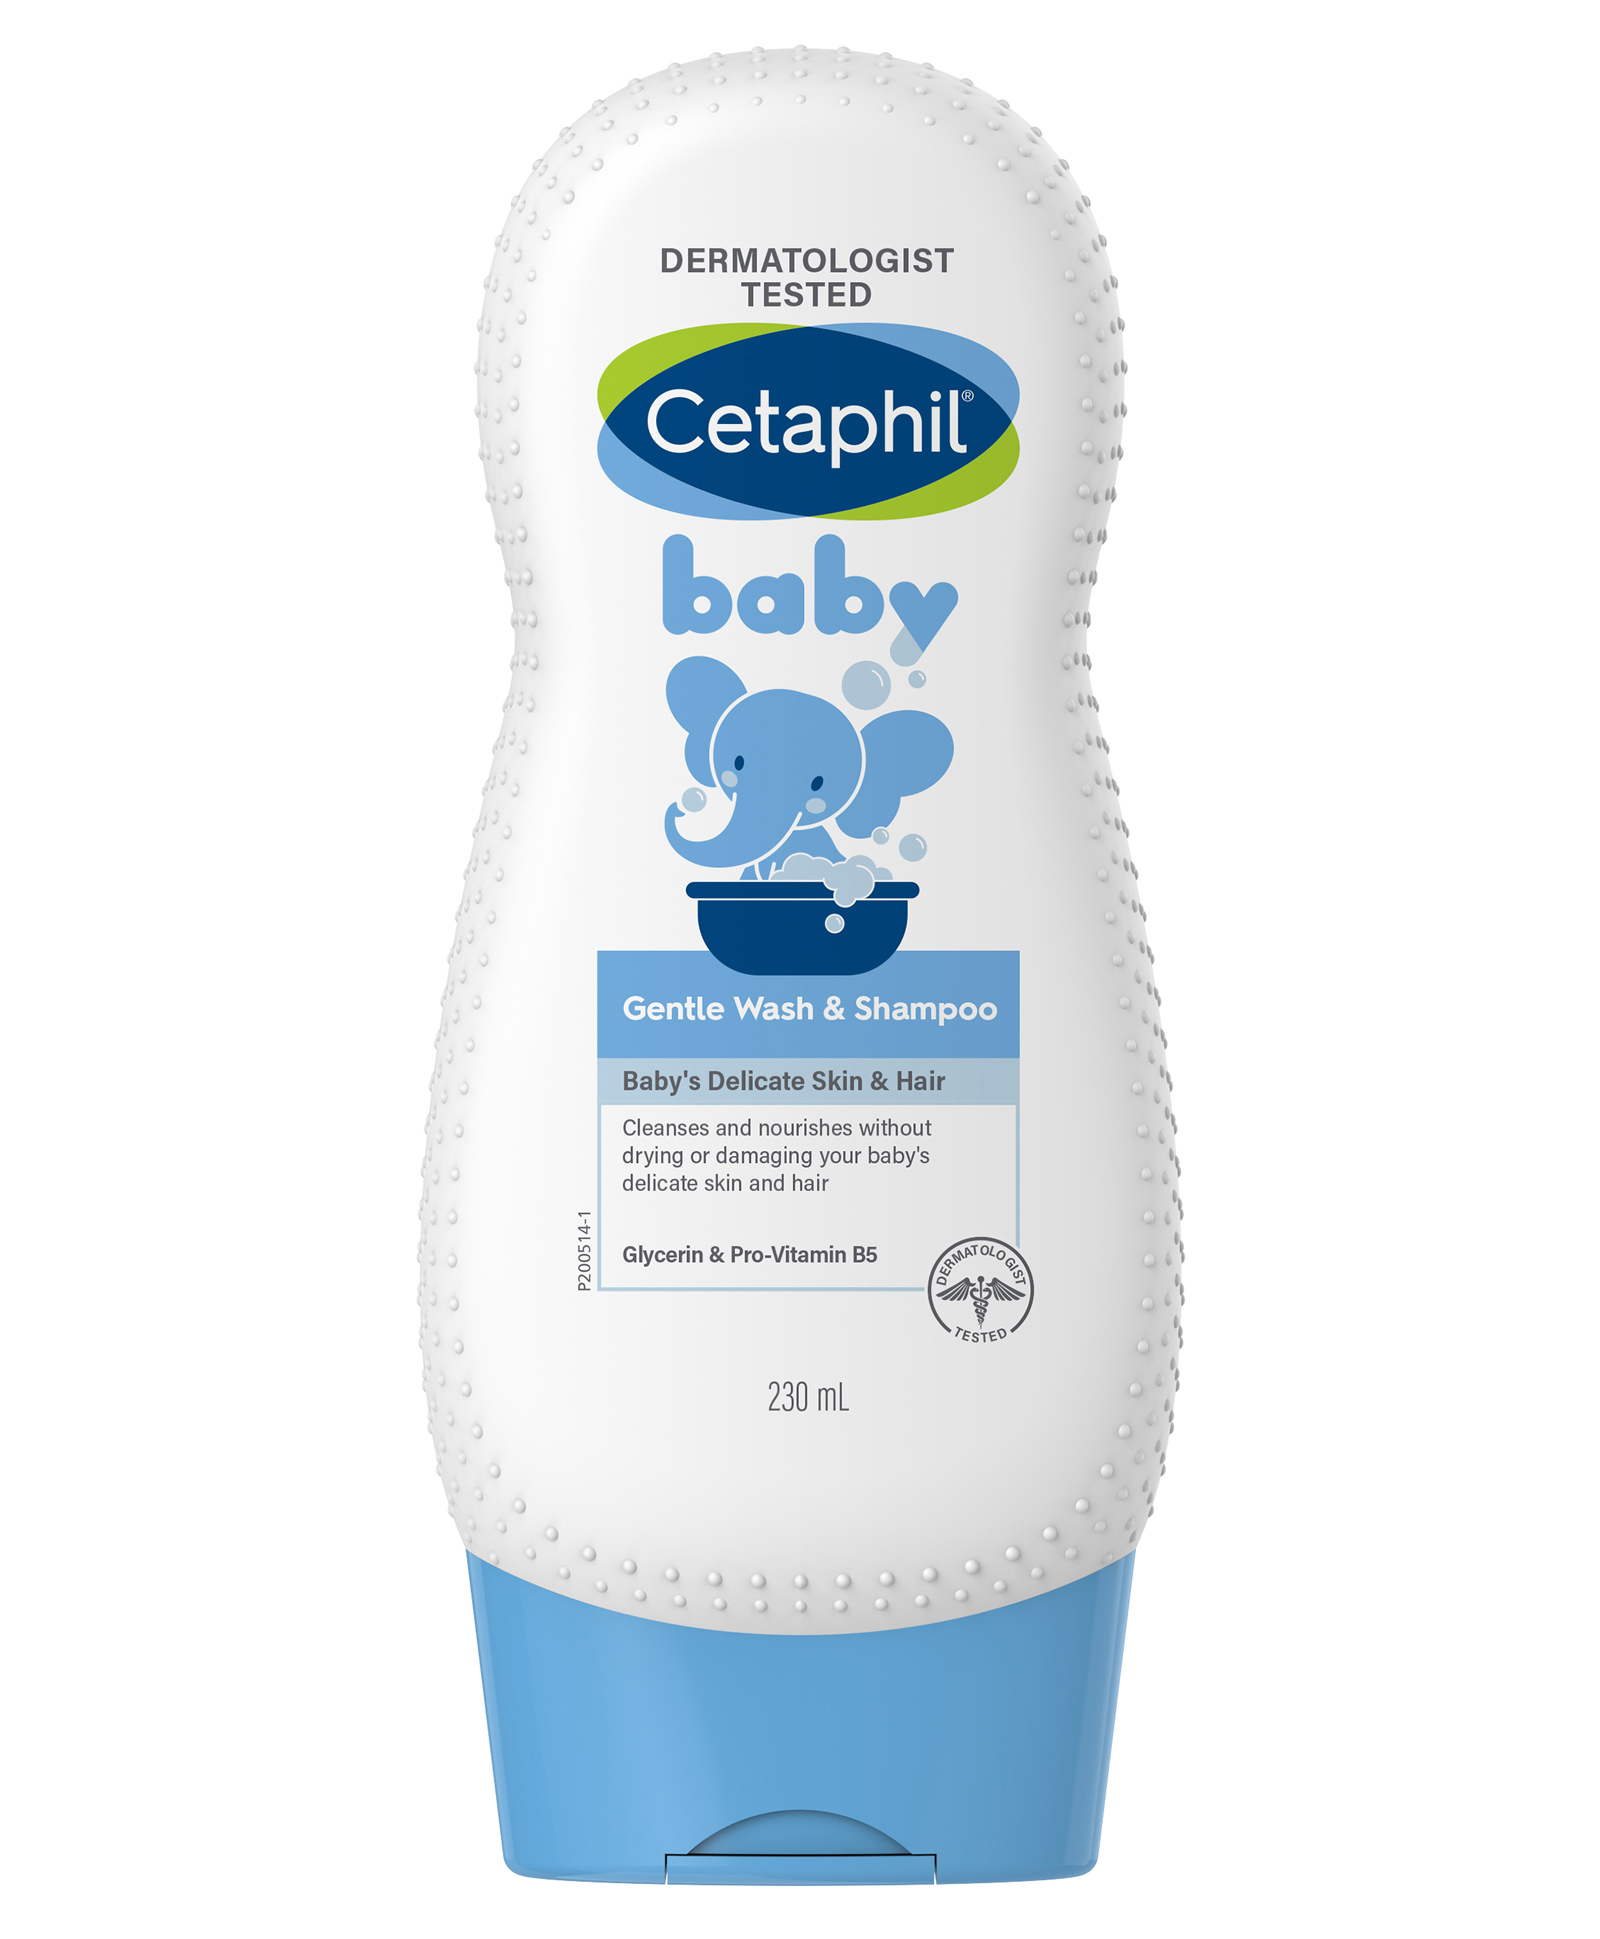 cetaphil baby bath and shampoo